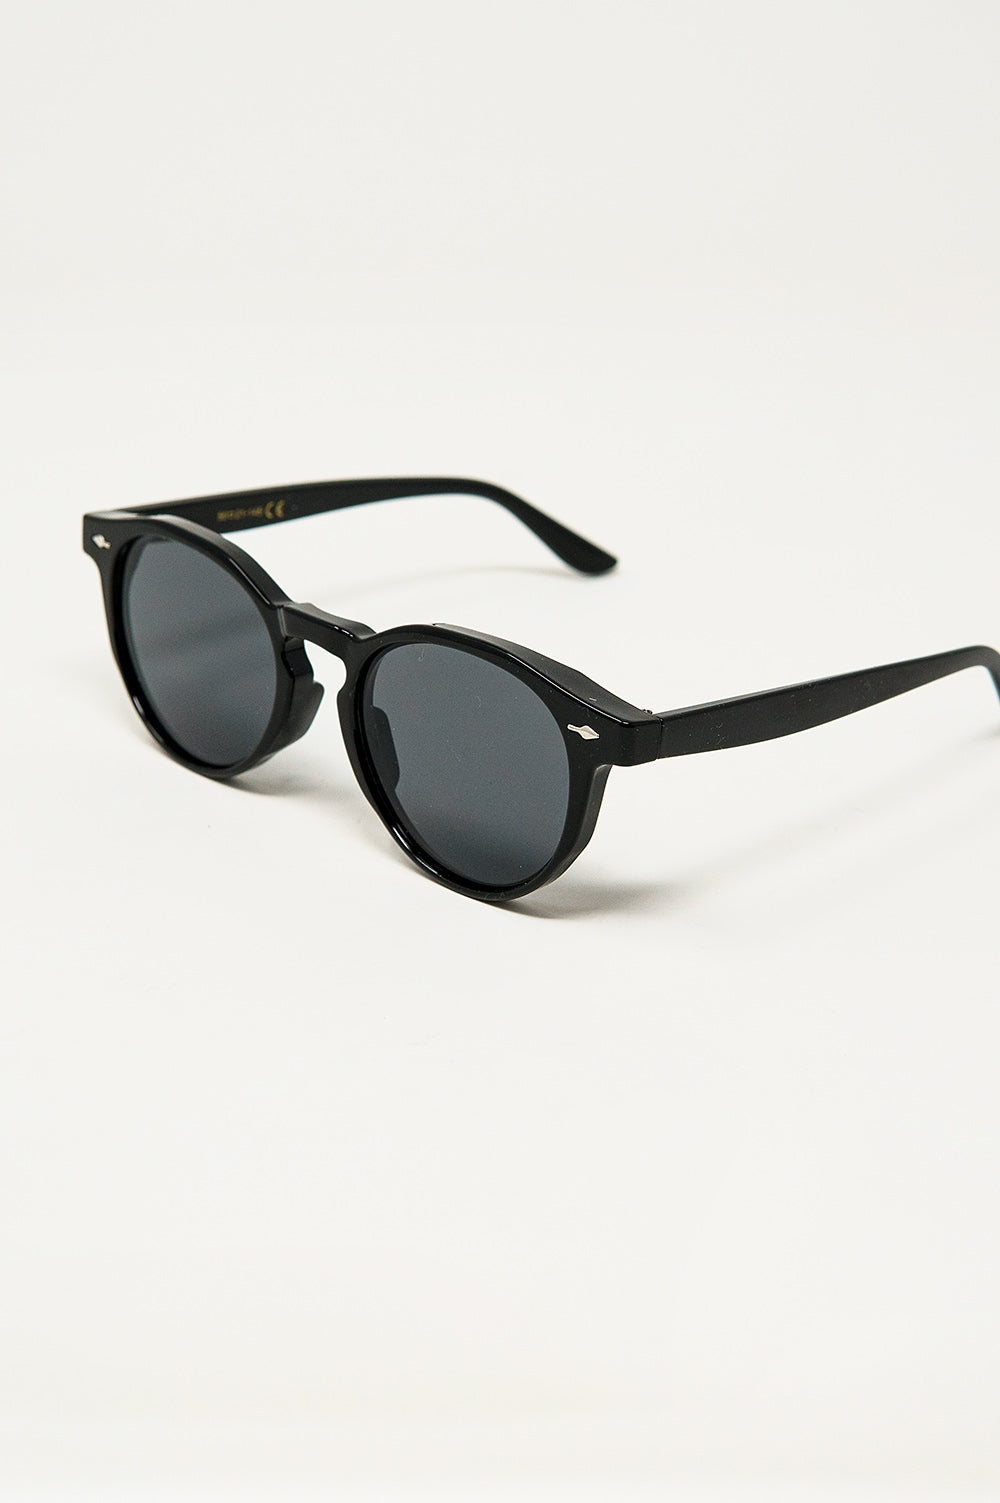 Q2 Retro Round Sunglasses With Smoke Black Lens in Black